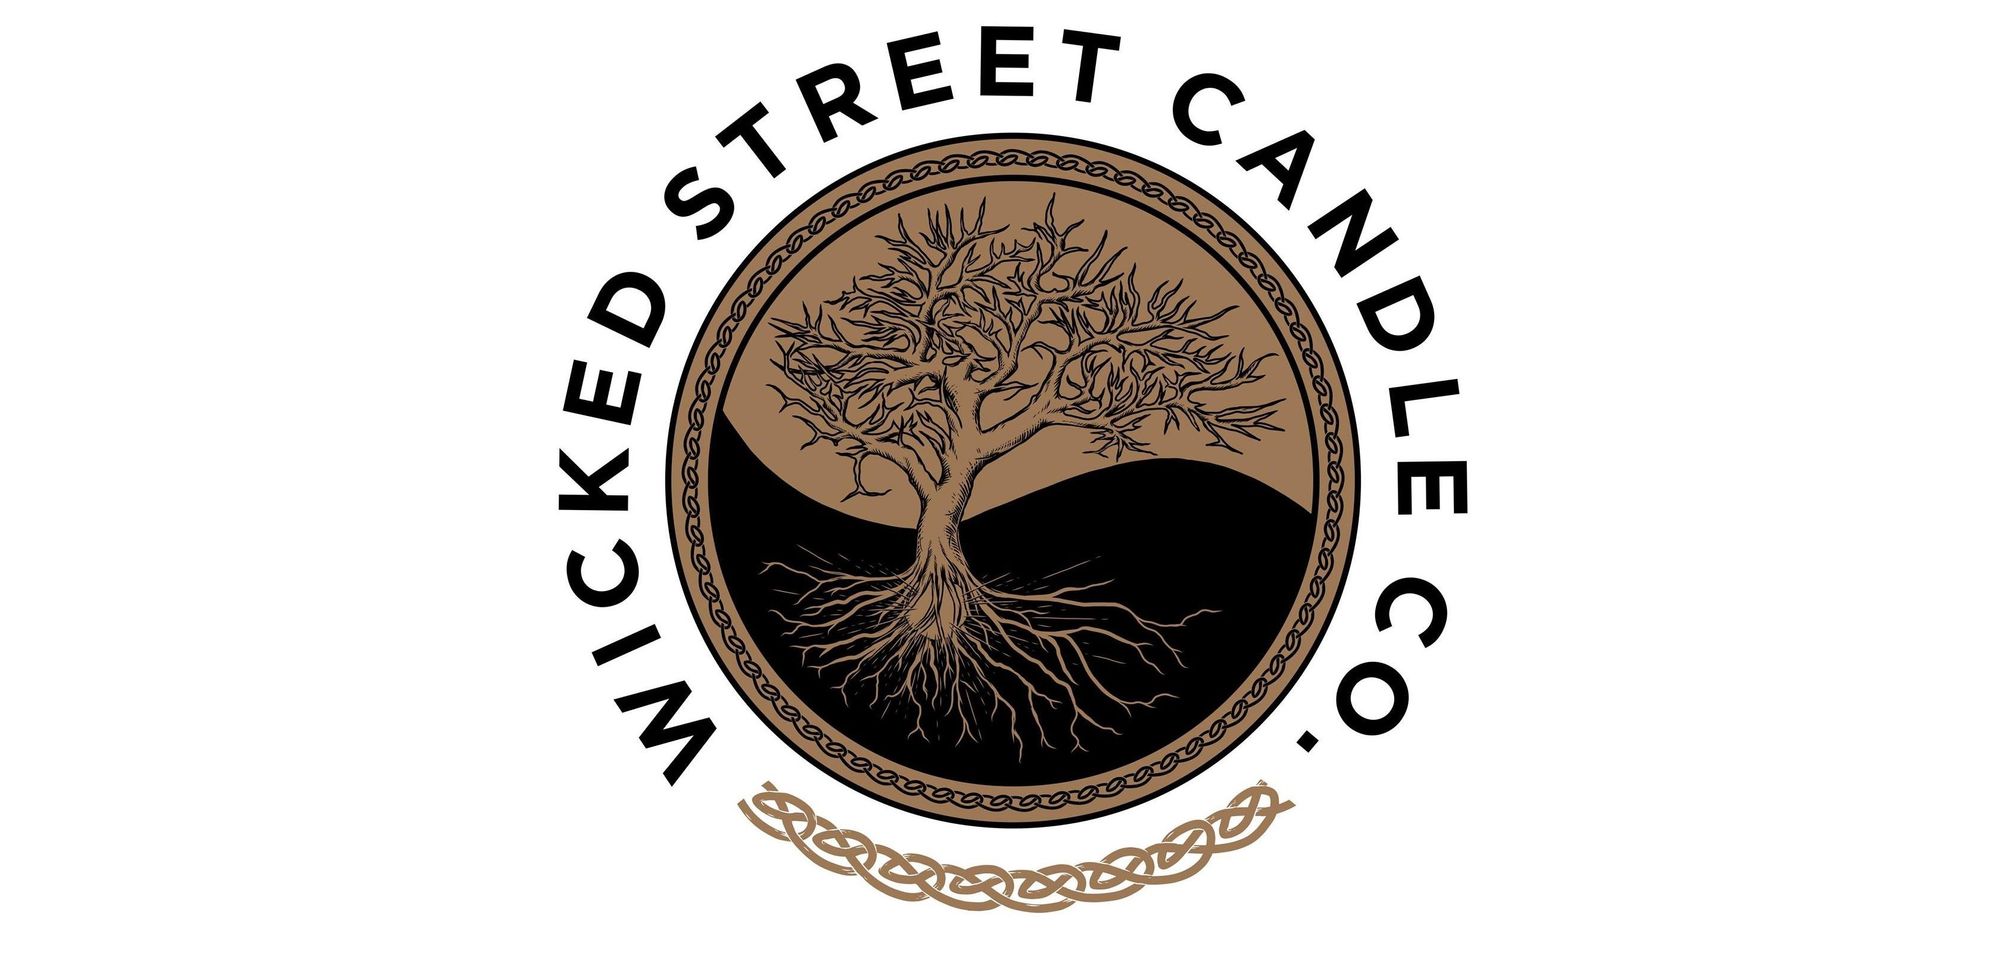 Wicked Street Candle Co. - Kristi Mardian